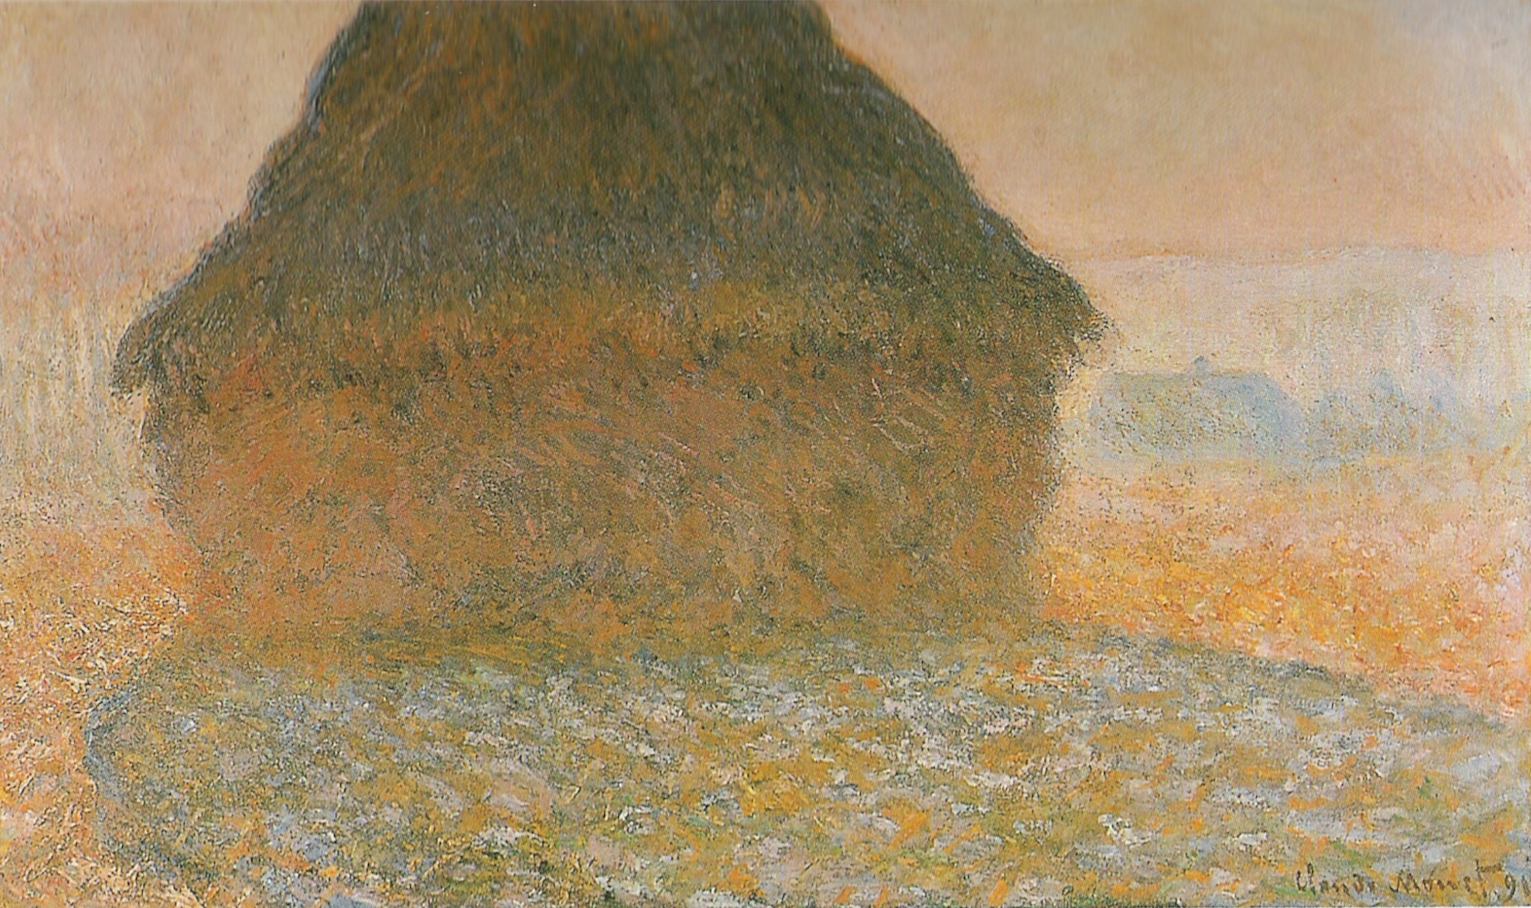 Claude+Monet-1840-1926 (531).jpg